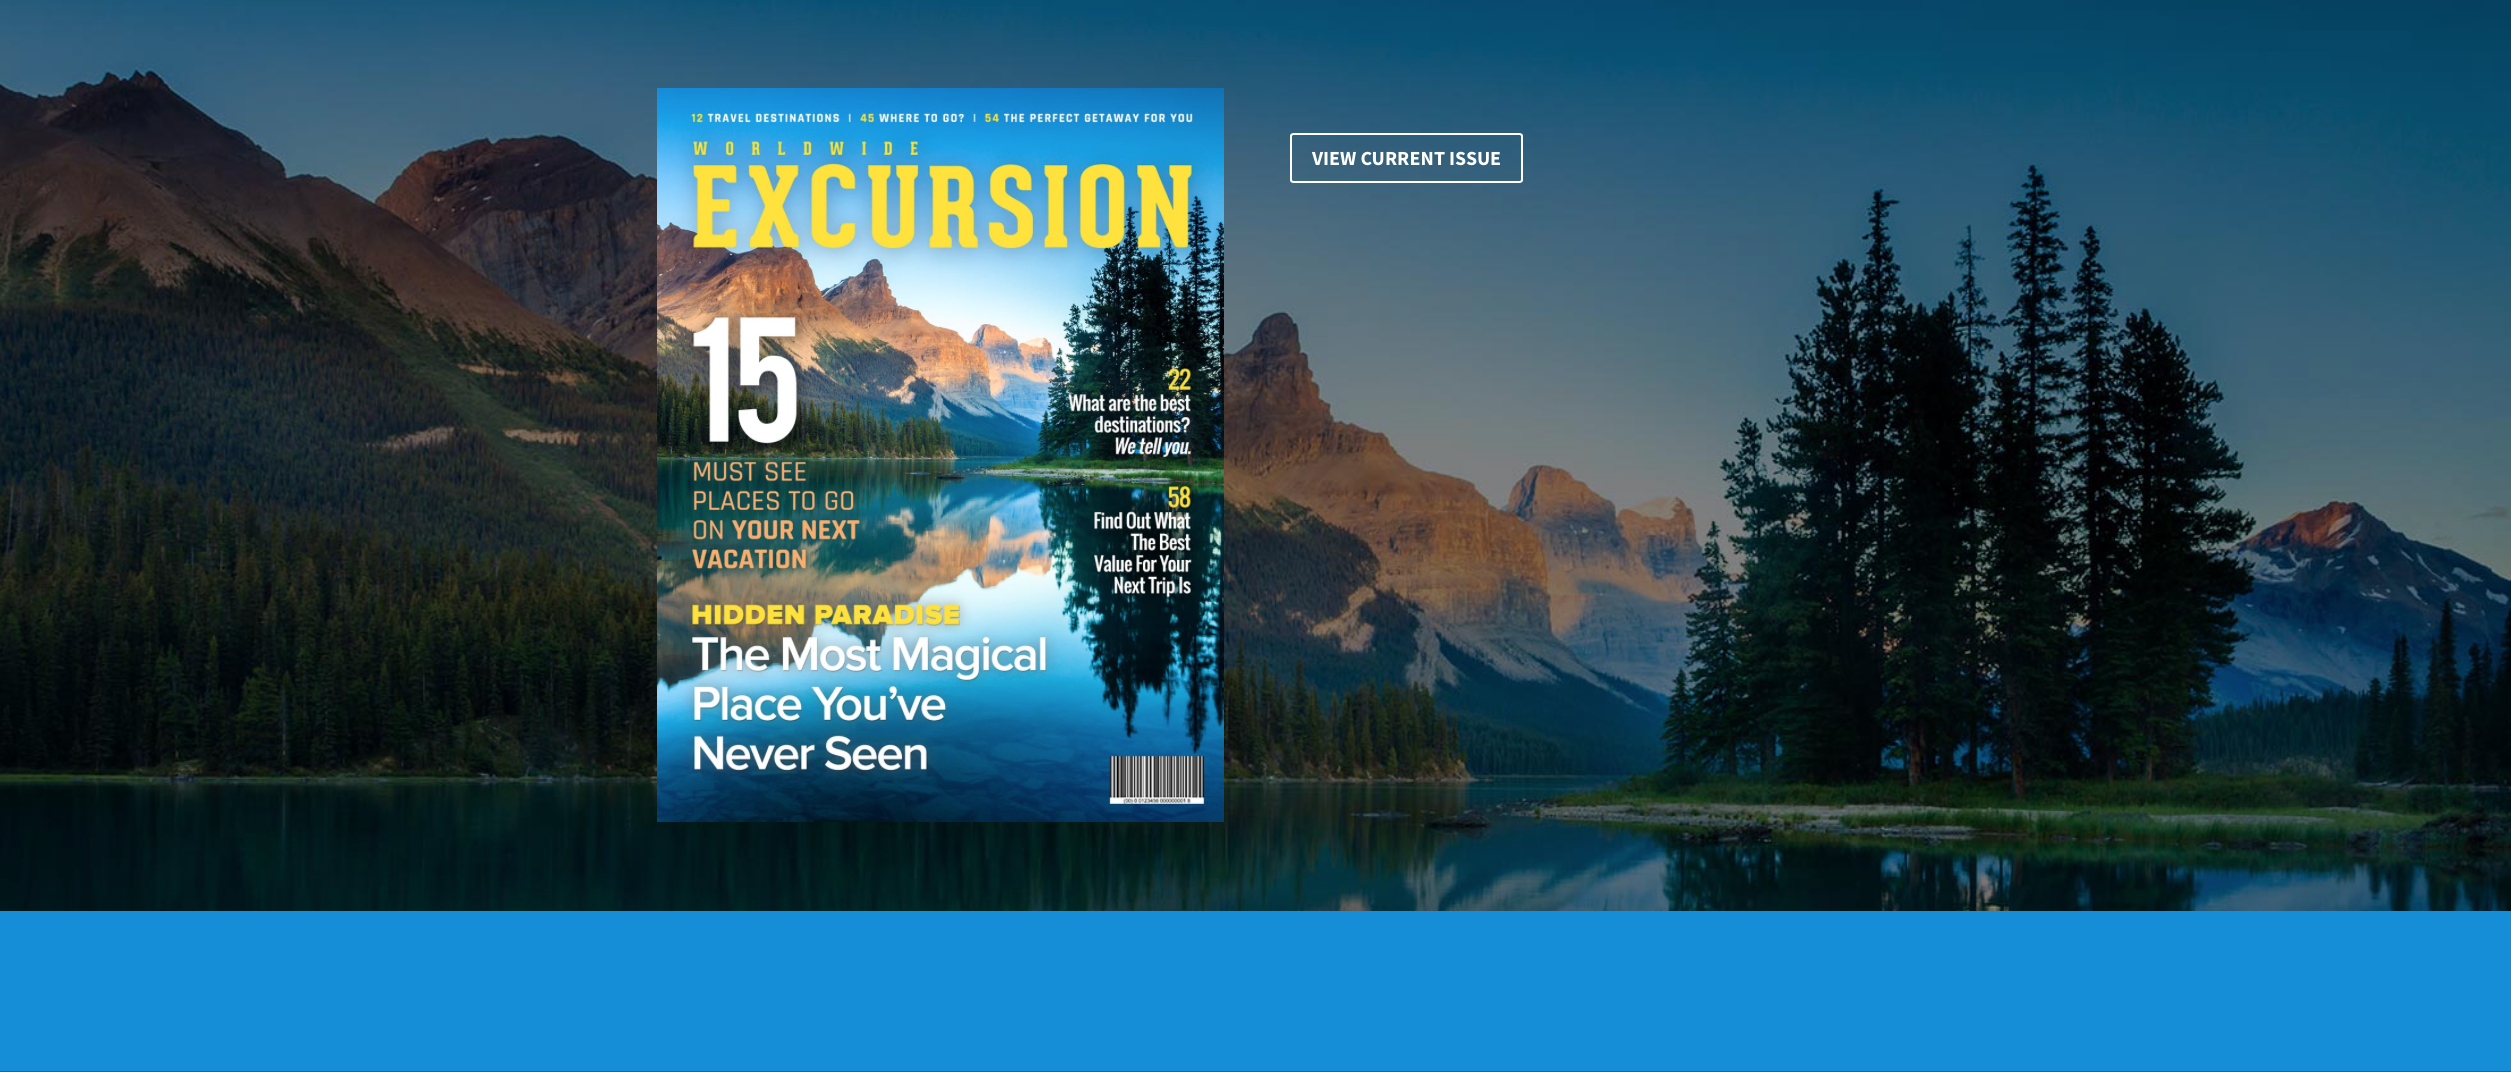 Digital Magazine Publishing Solution Evolves Magazines for a Vertical Future